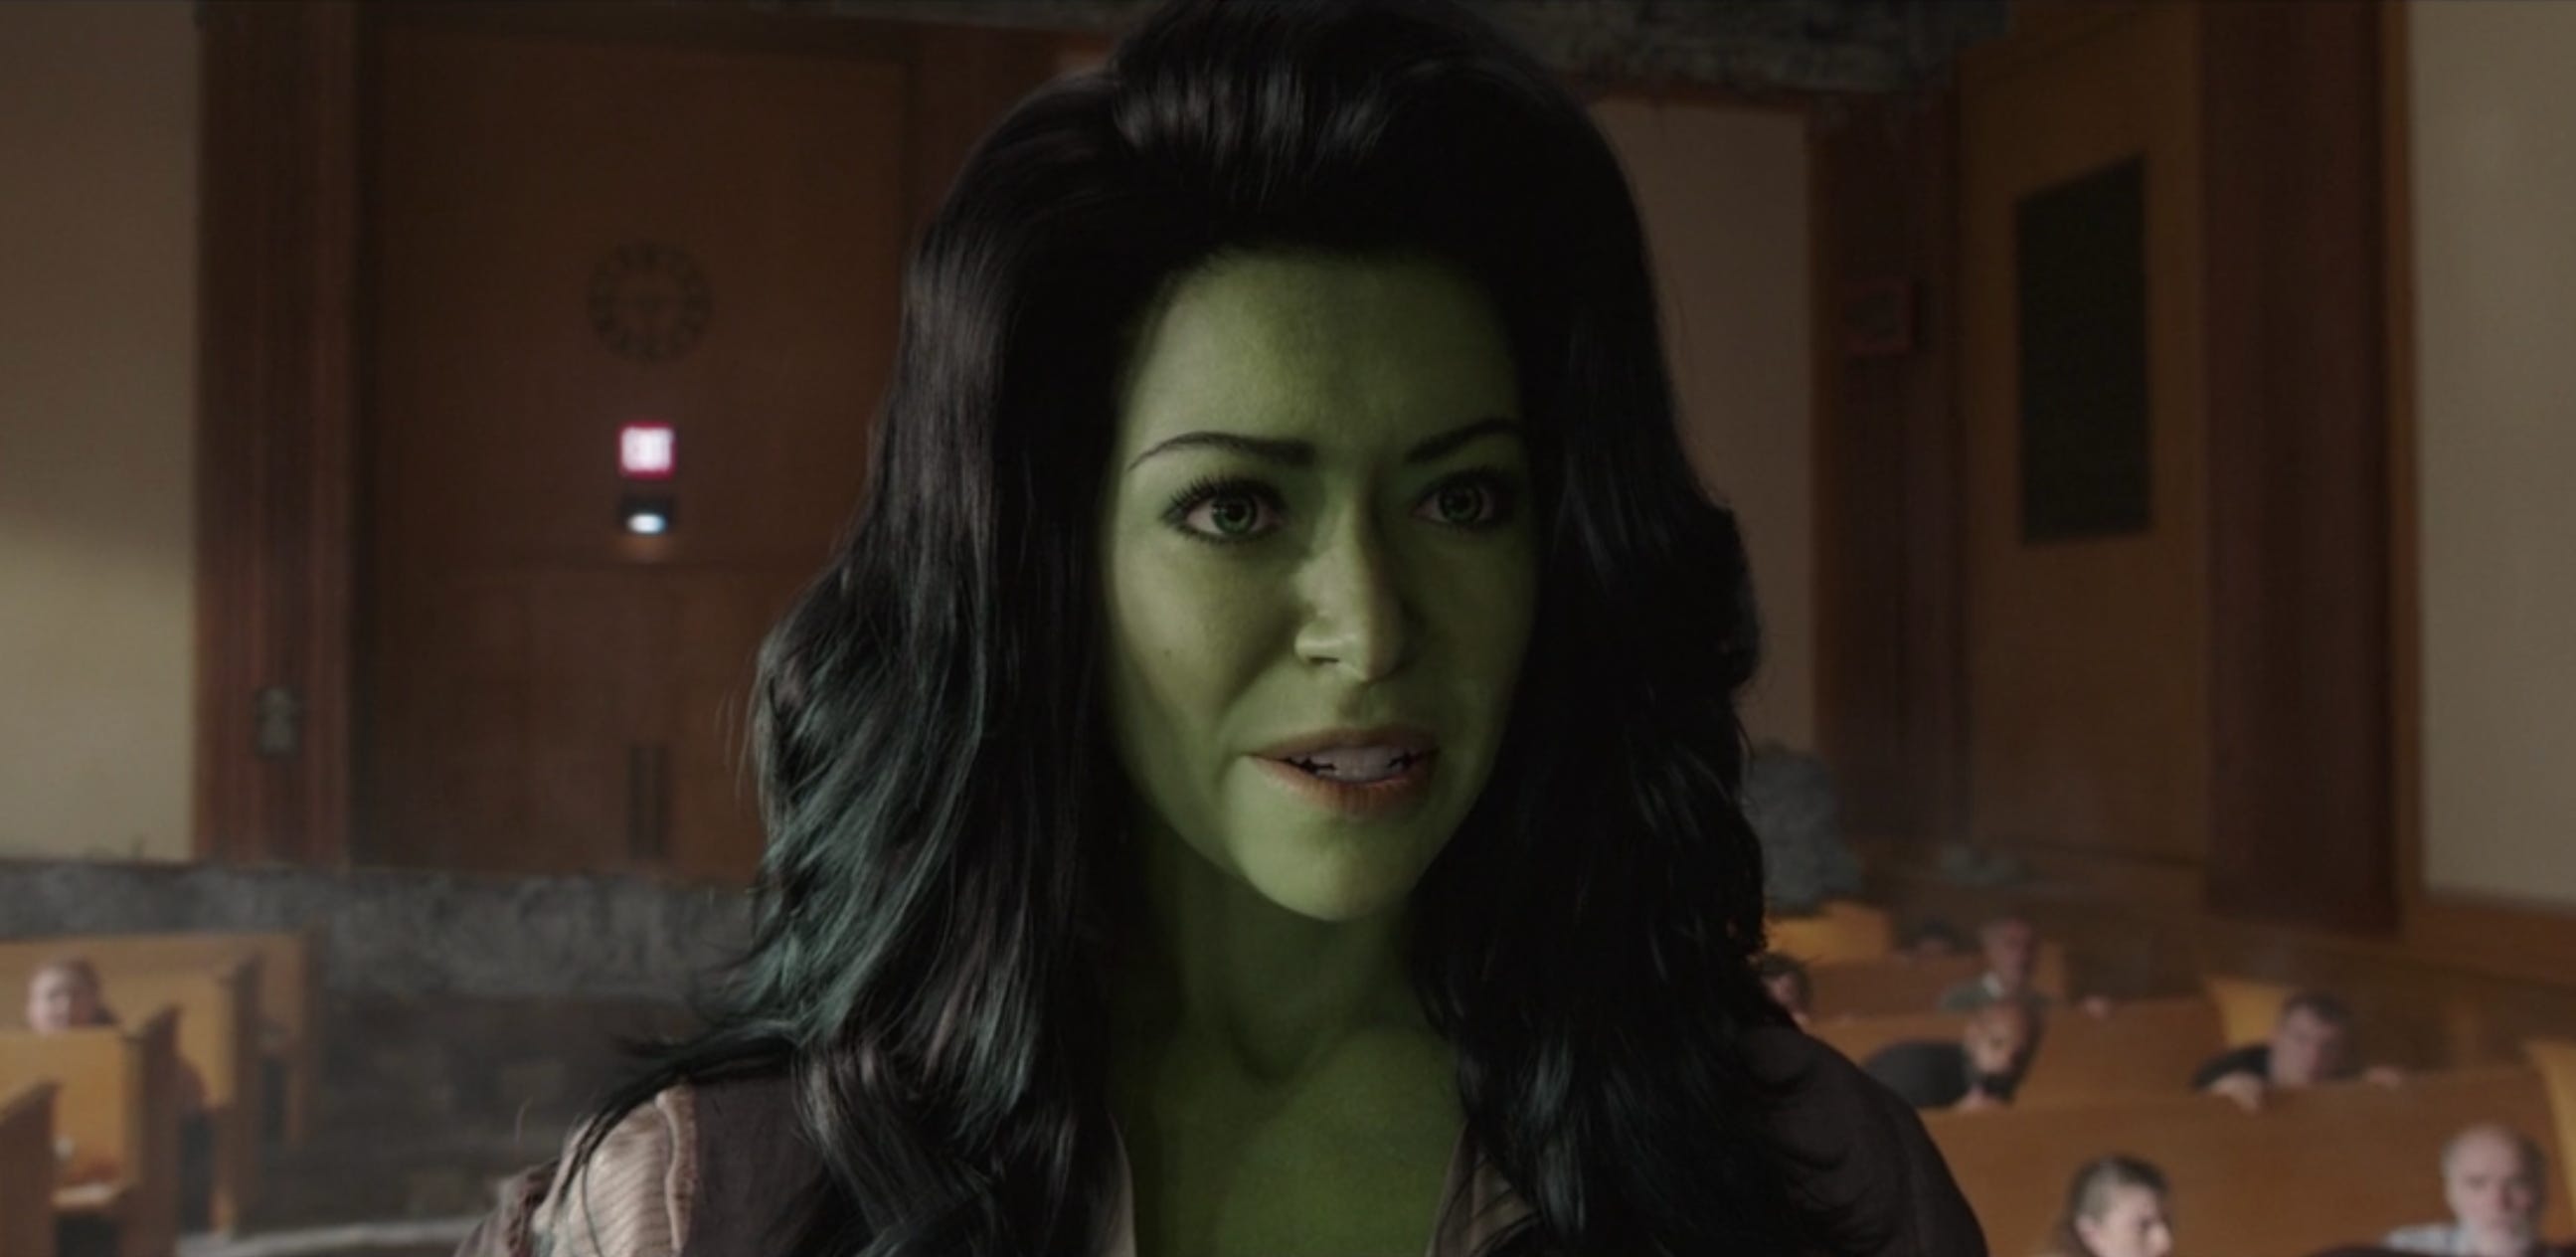 She-Hulk: Attorney At Law - Season 1 Review